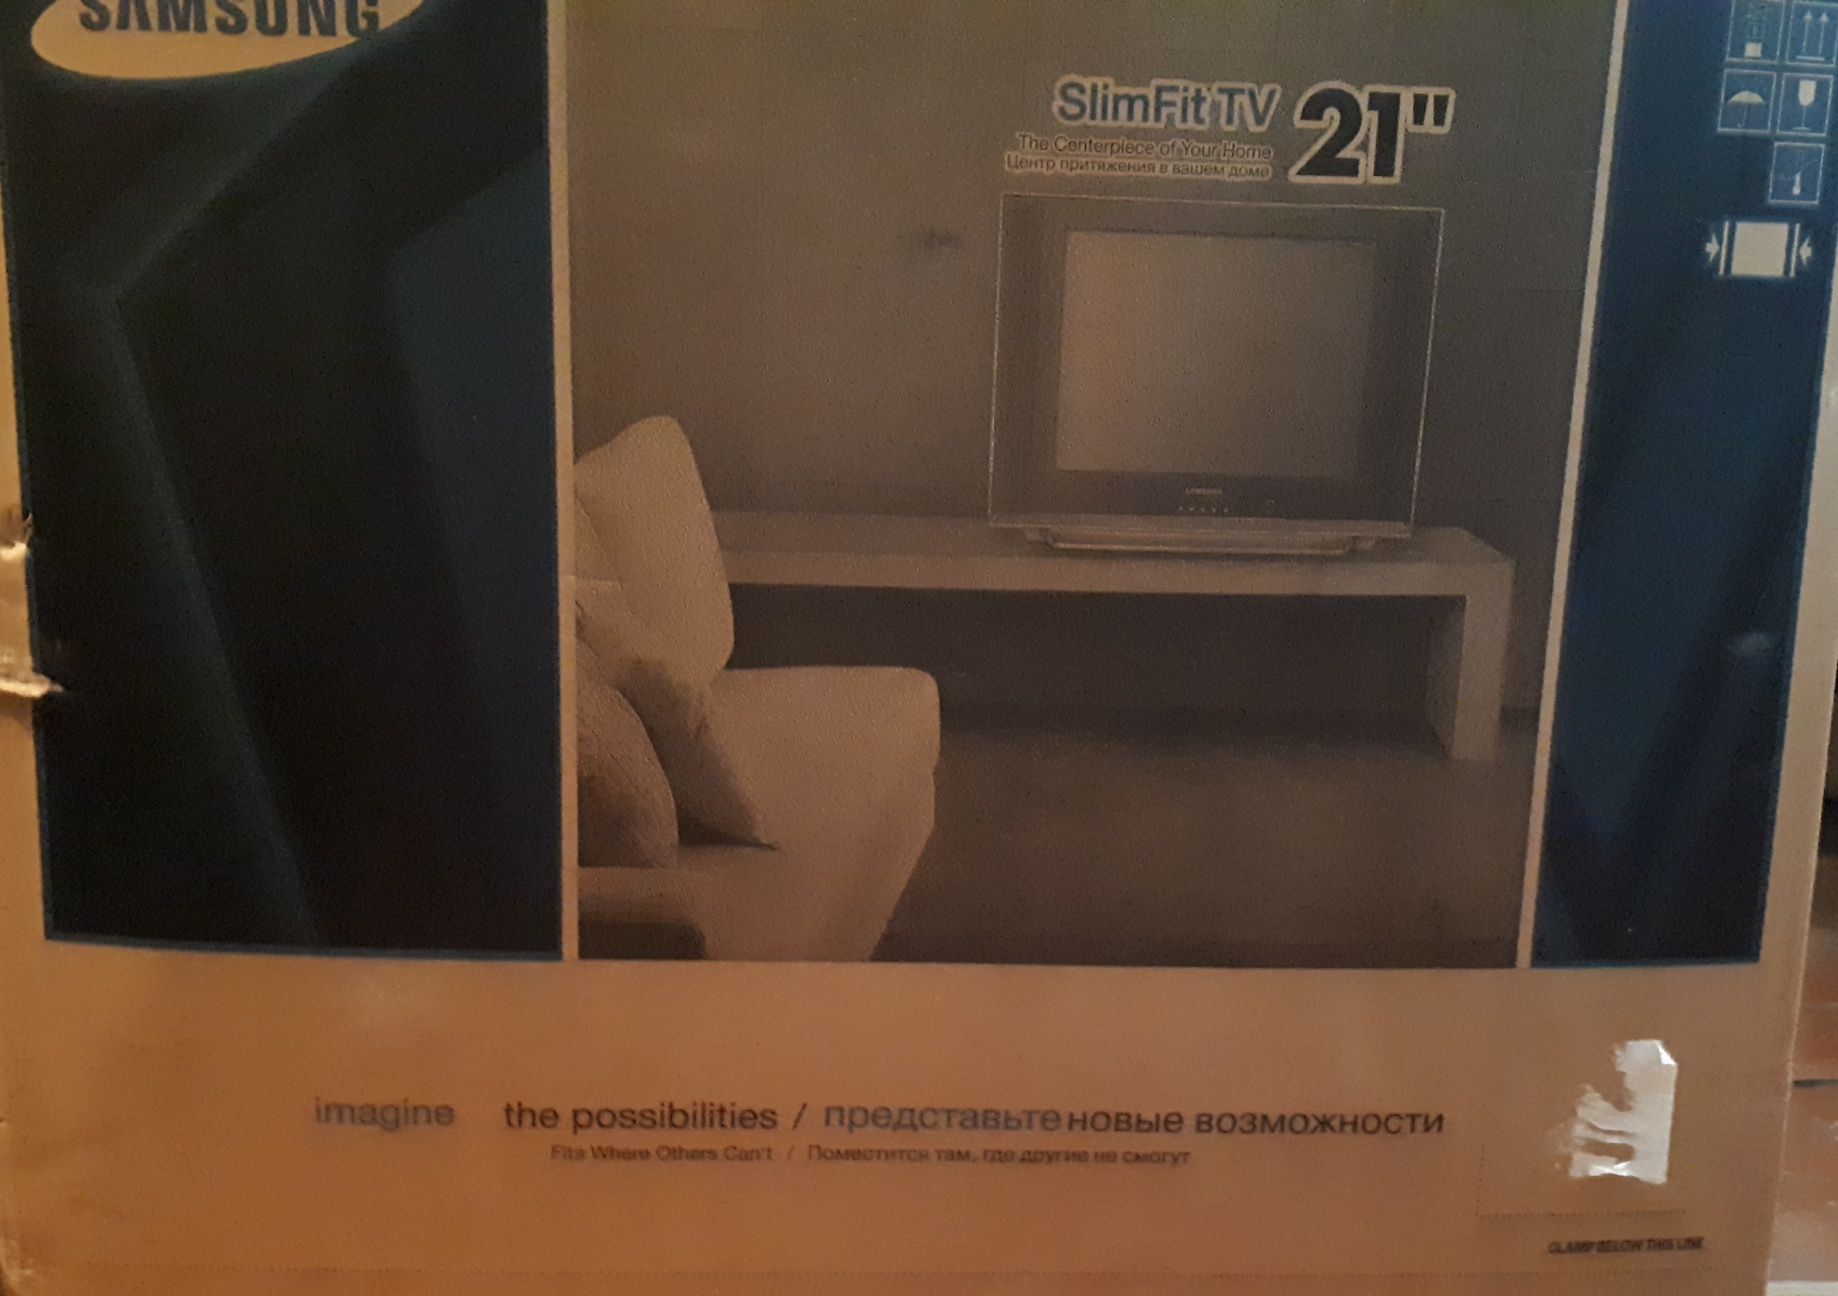 Продам телевизор Samsung Slim Fit 21"